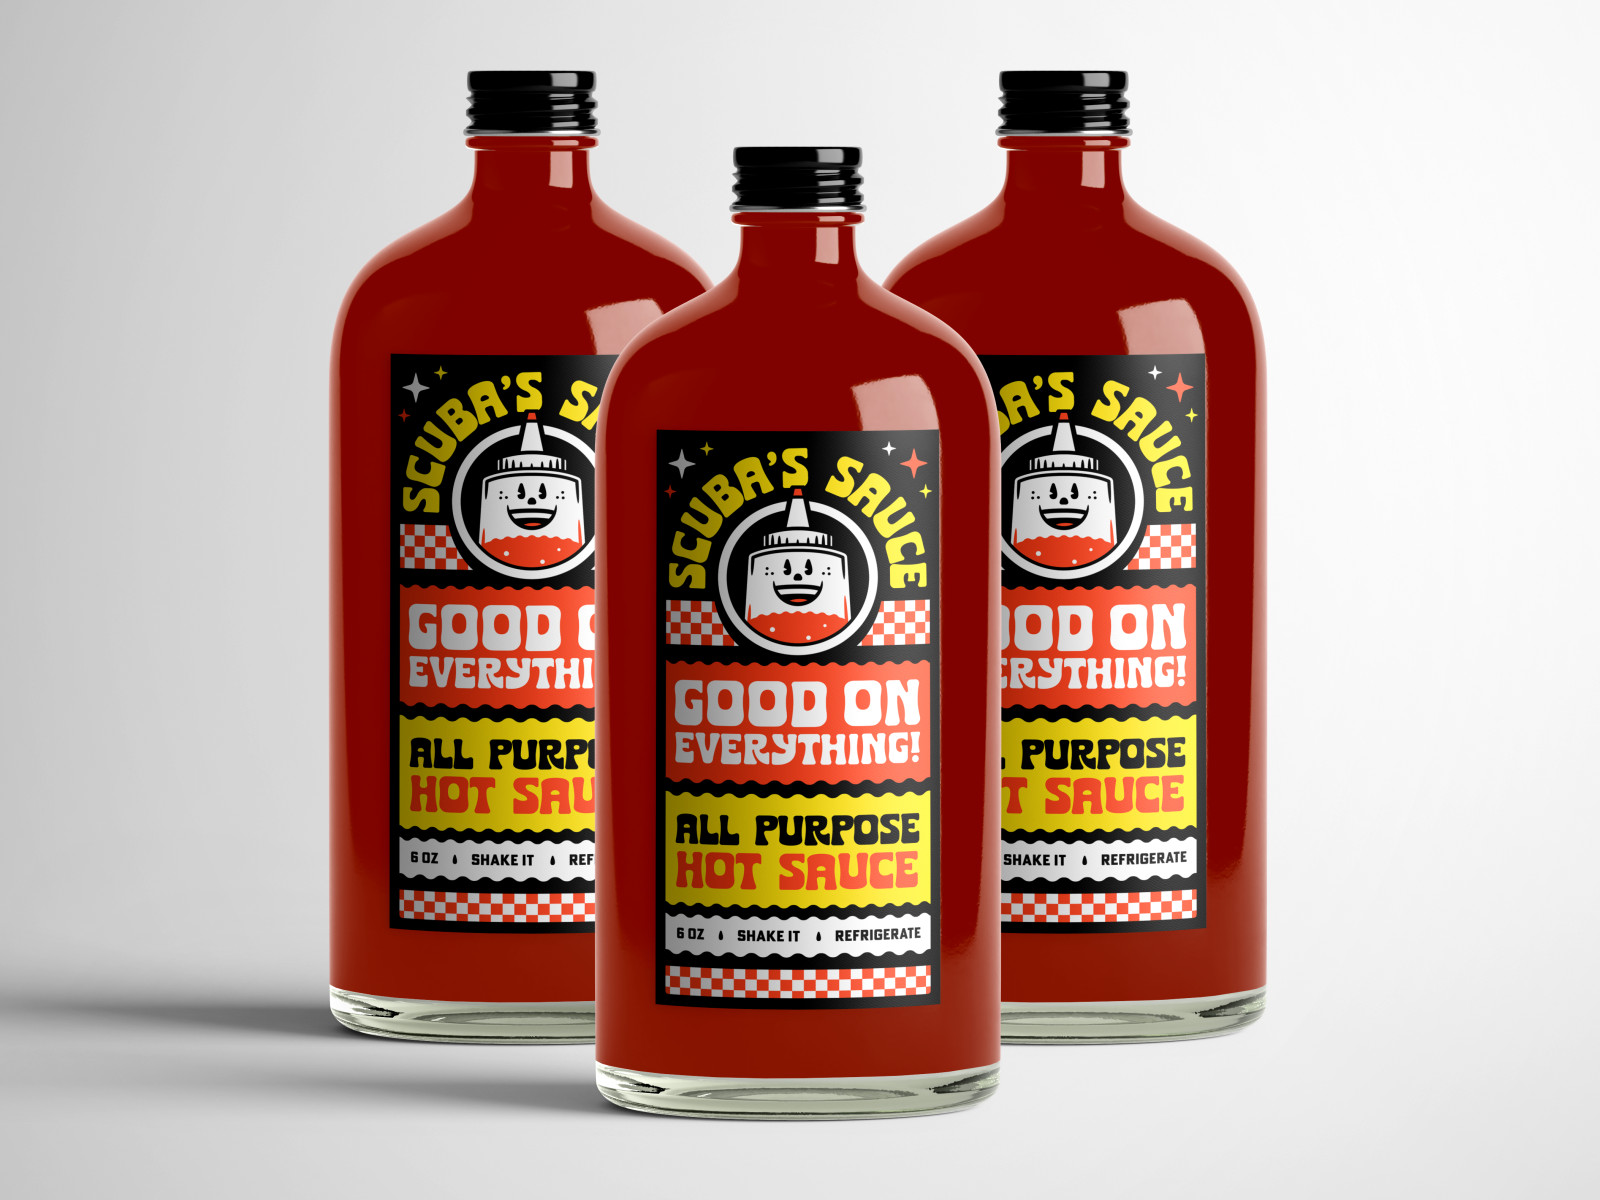 sauce-label-bottles-mockup-by-msg317-on-dribbble